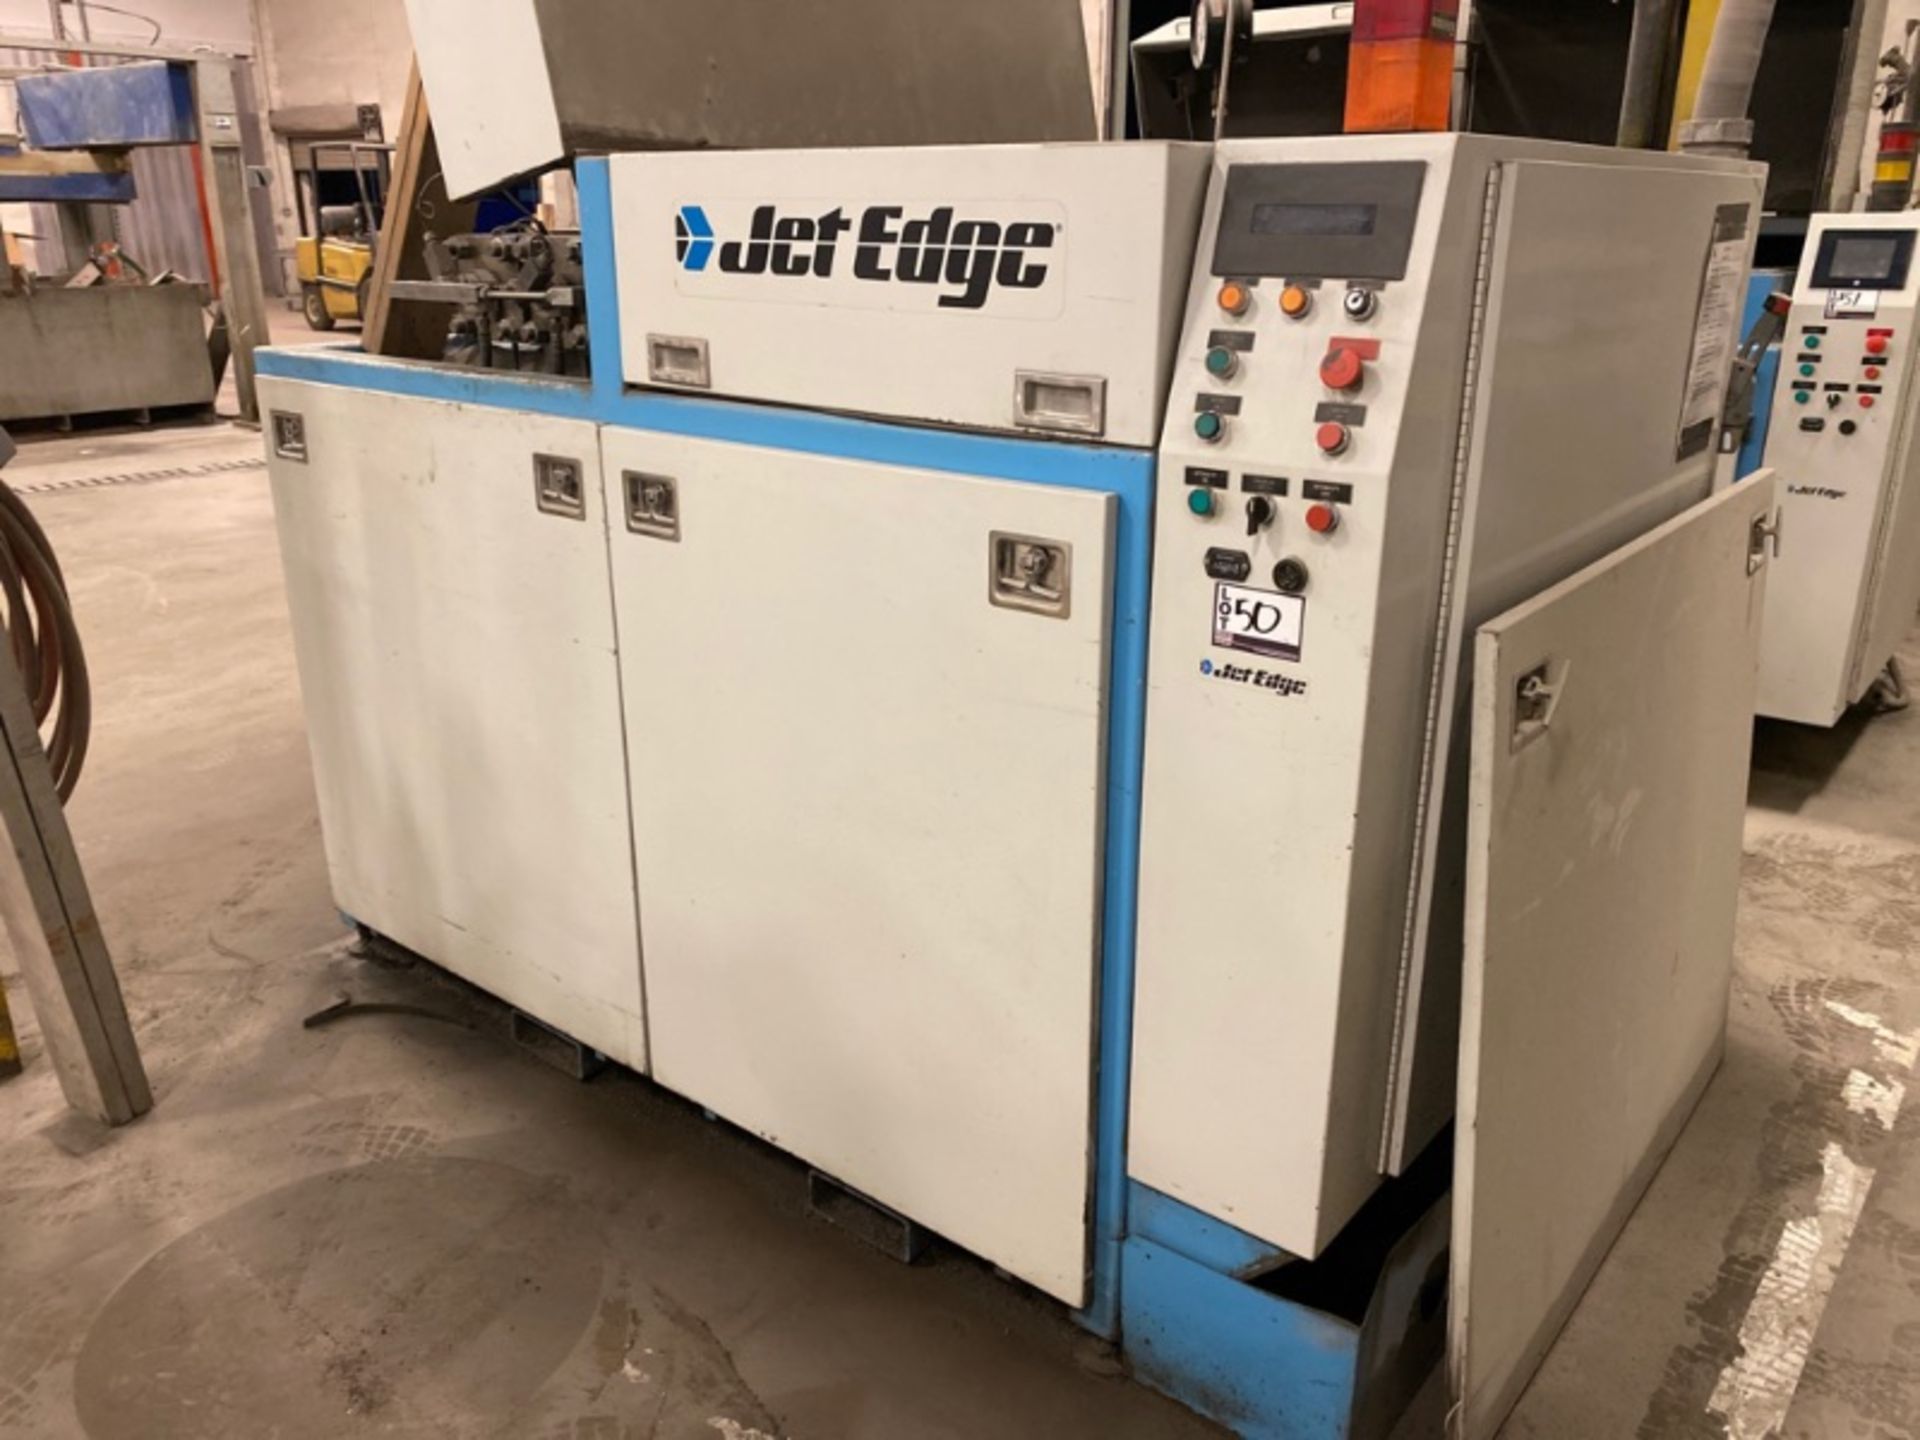 Jet Edge 55-150 150 HP Intensifier, s/n 14839, New 2002 (Rebuilt in 2019 at Cost of $21,560) - Image 2 of 3